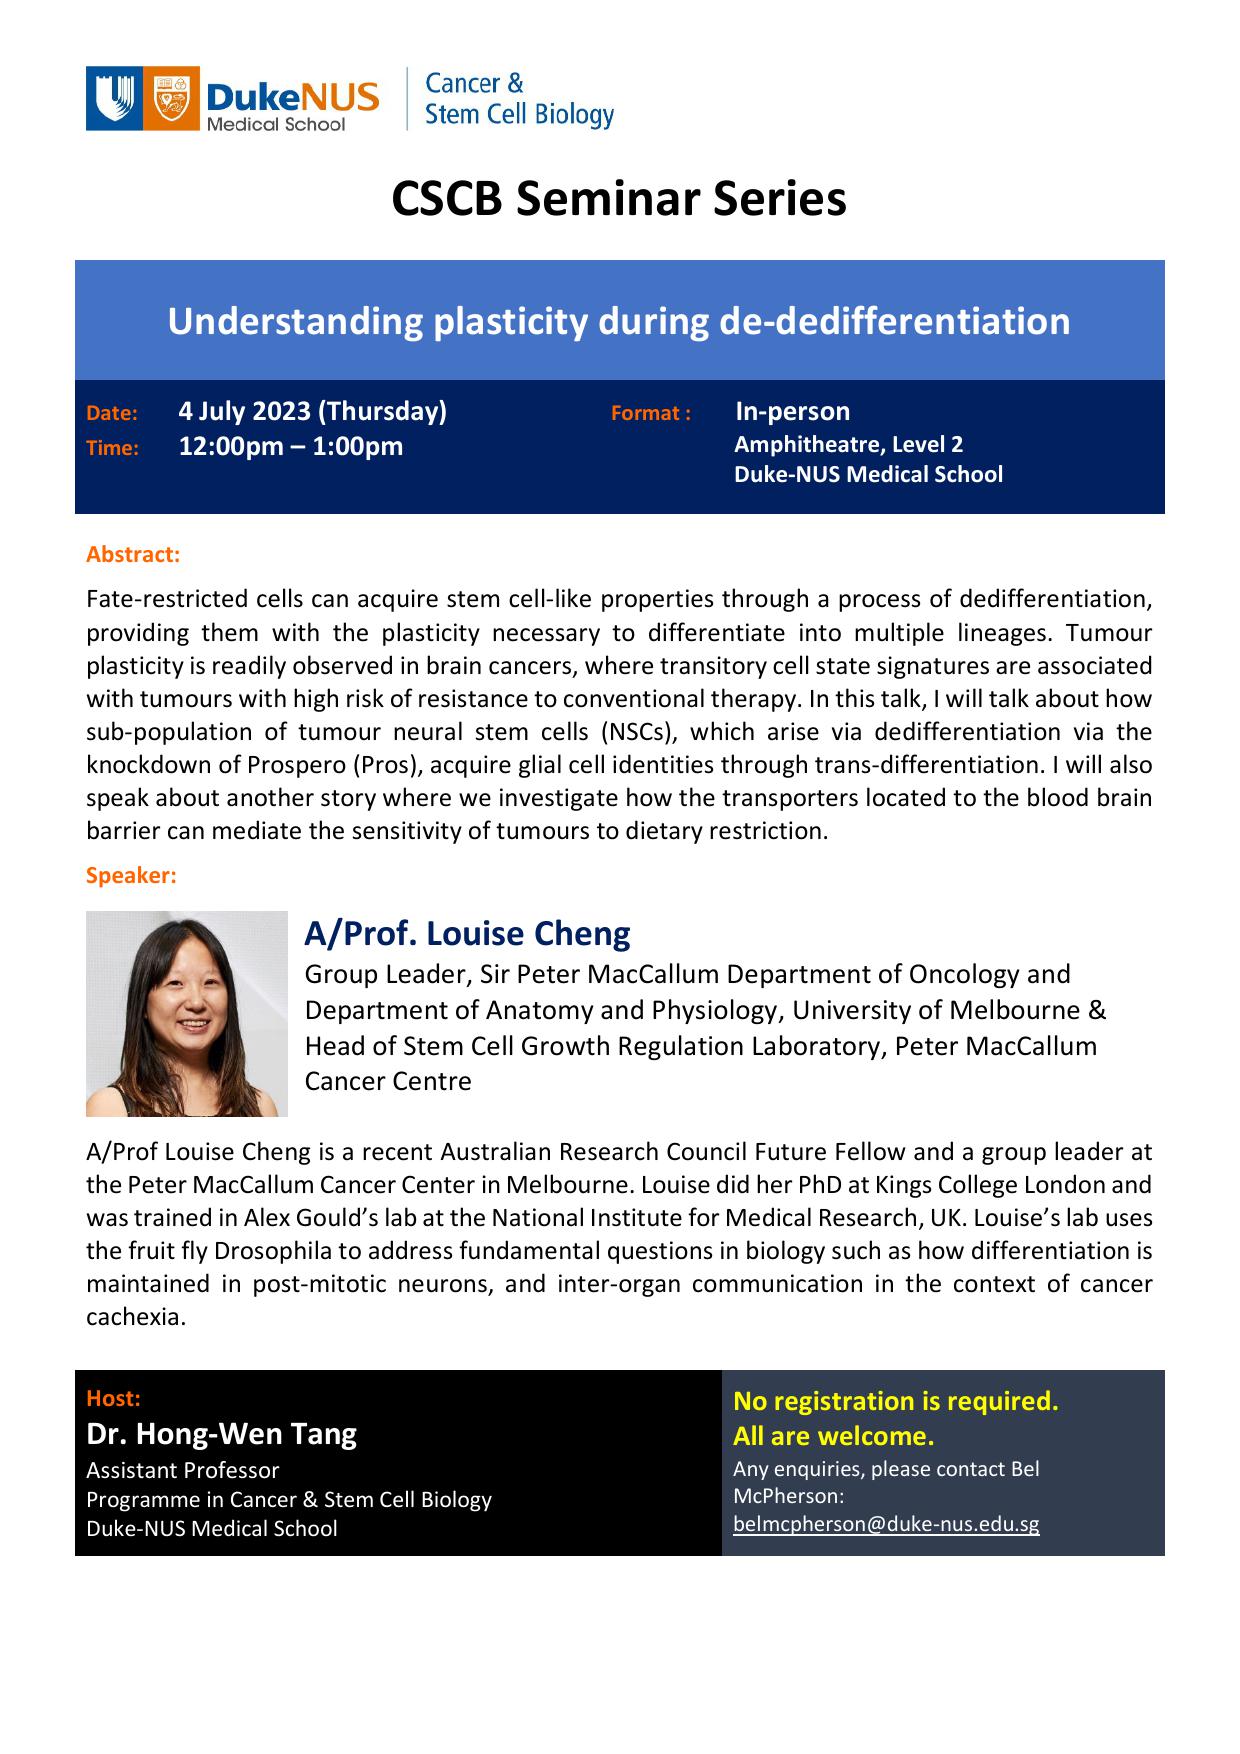 CSCB Seminar Series flyer_Dr Louise Cheng